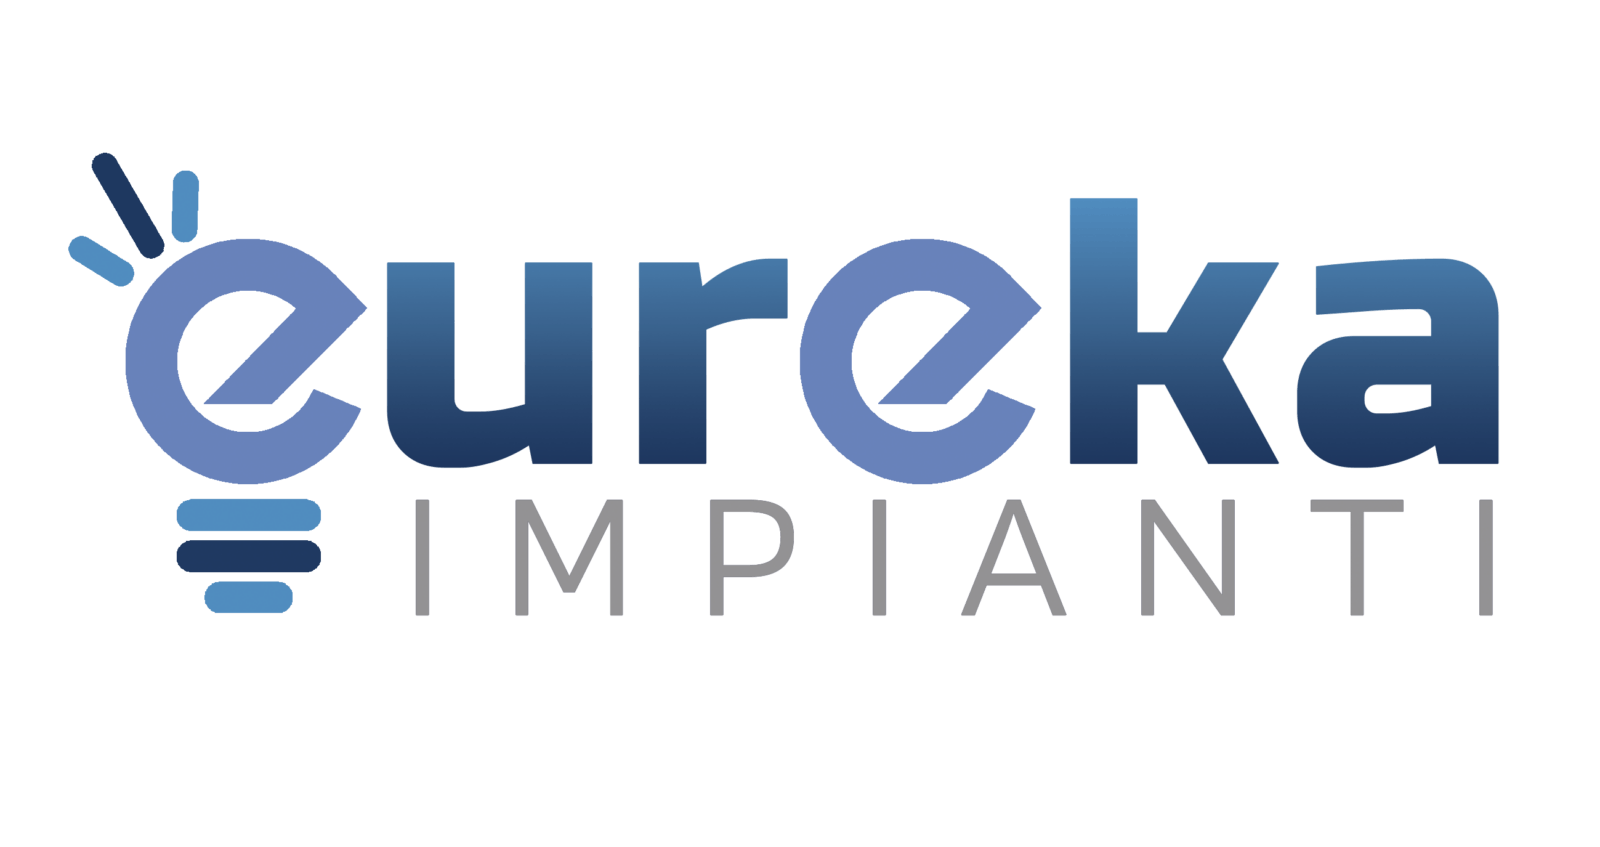 Eureka Impianti logo